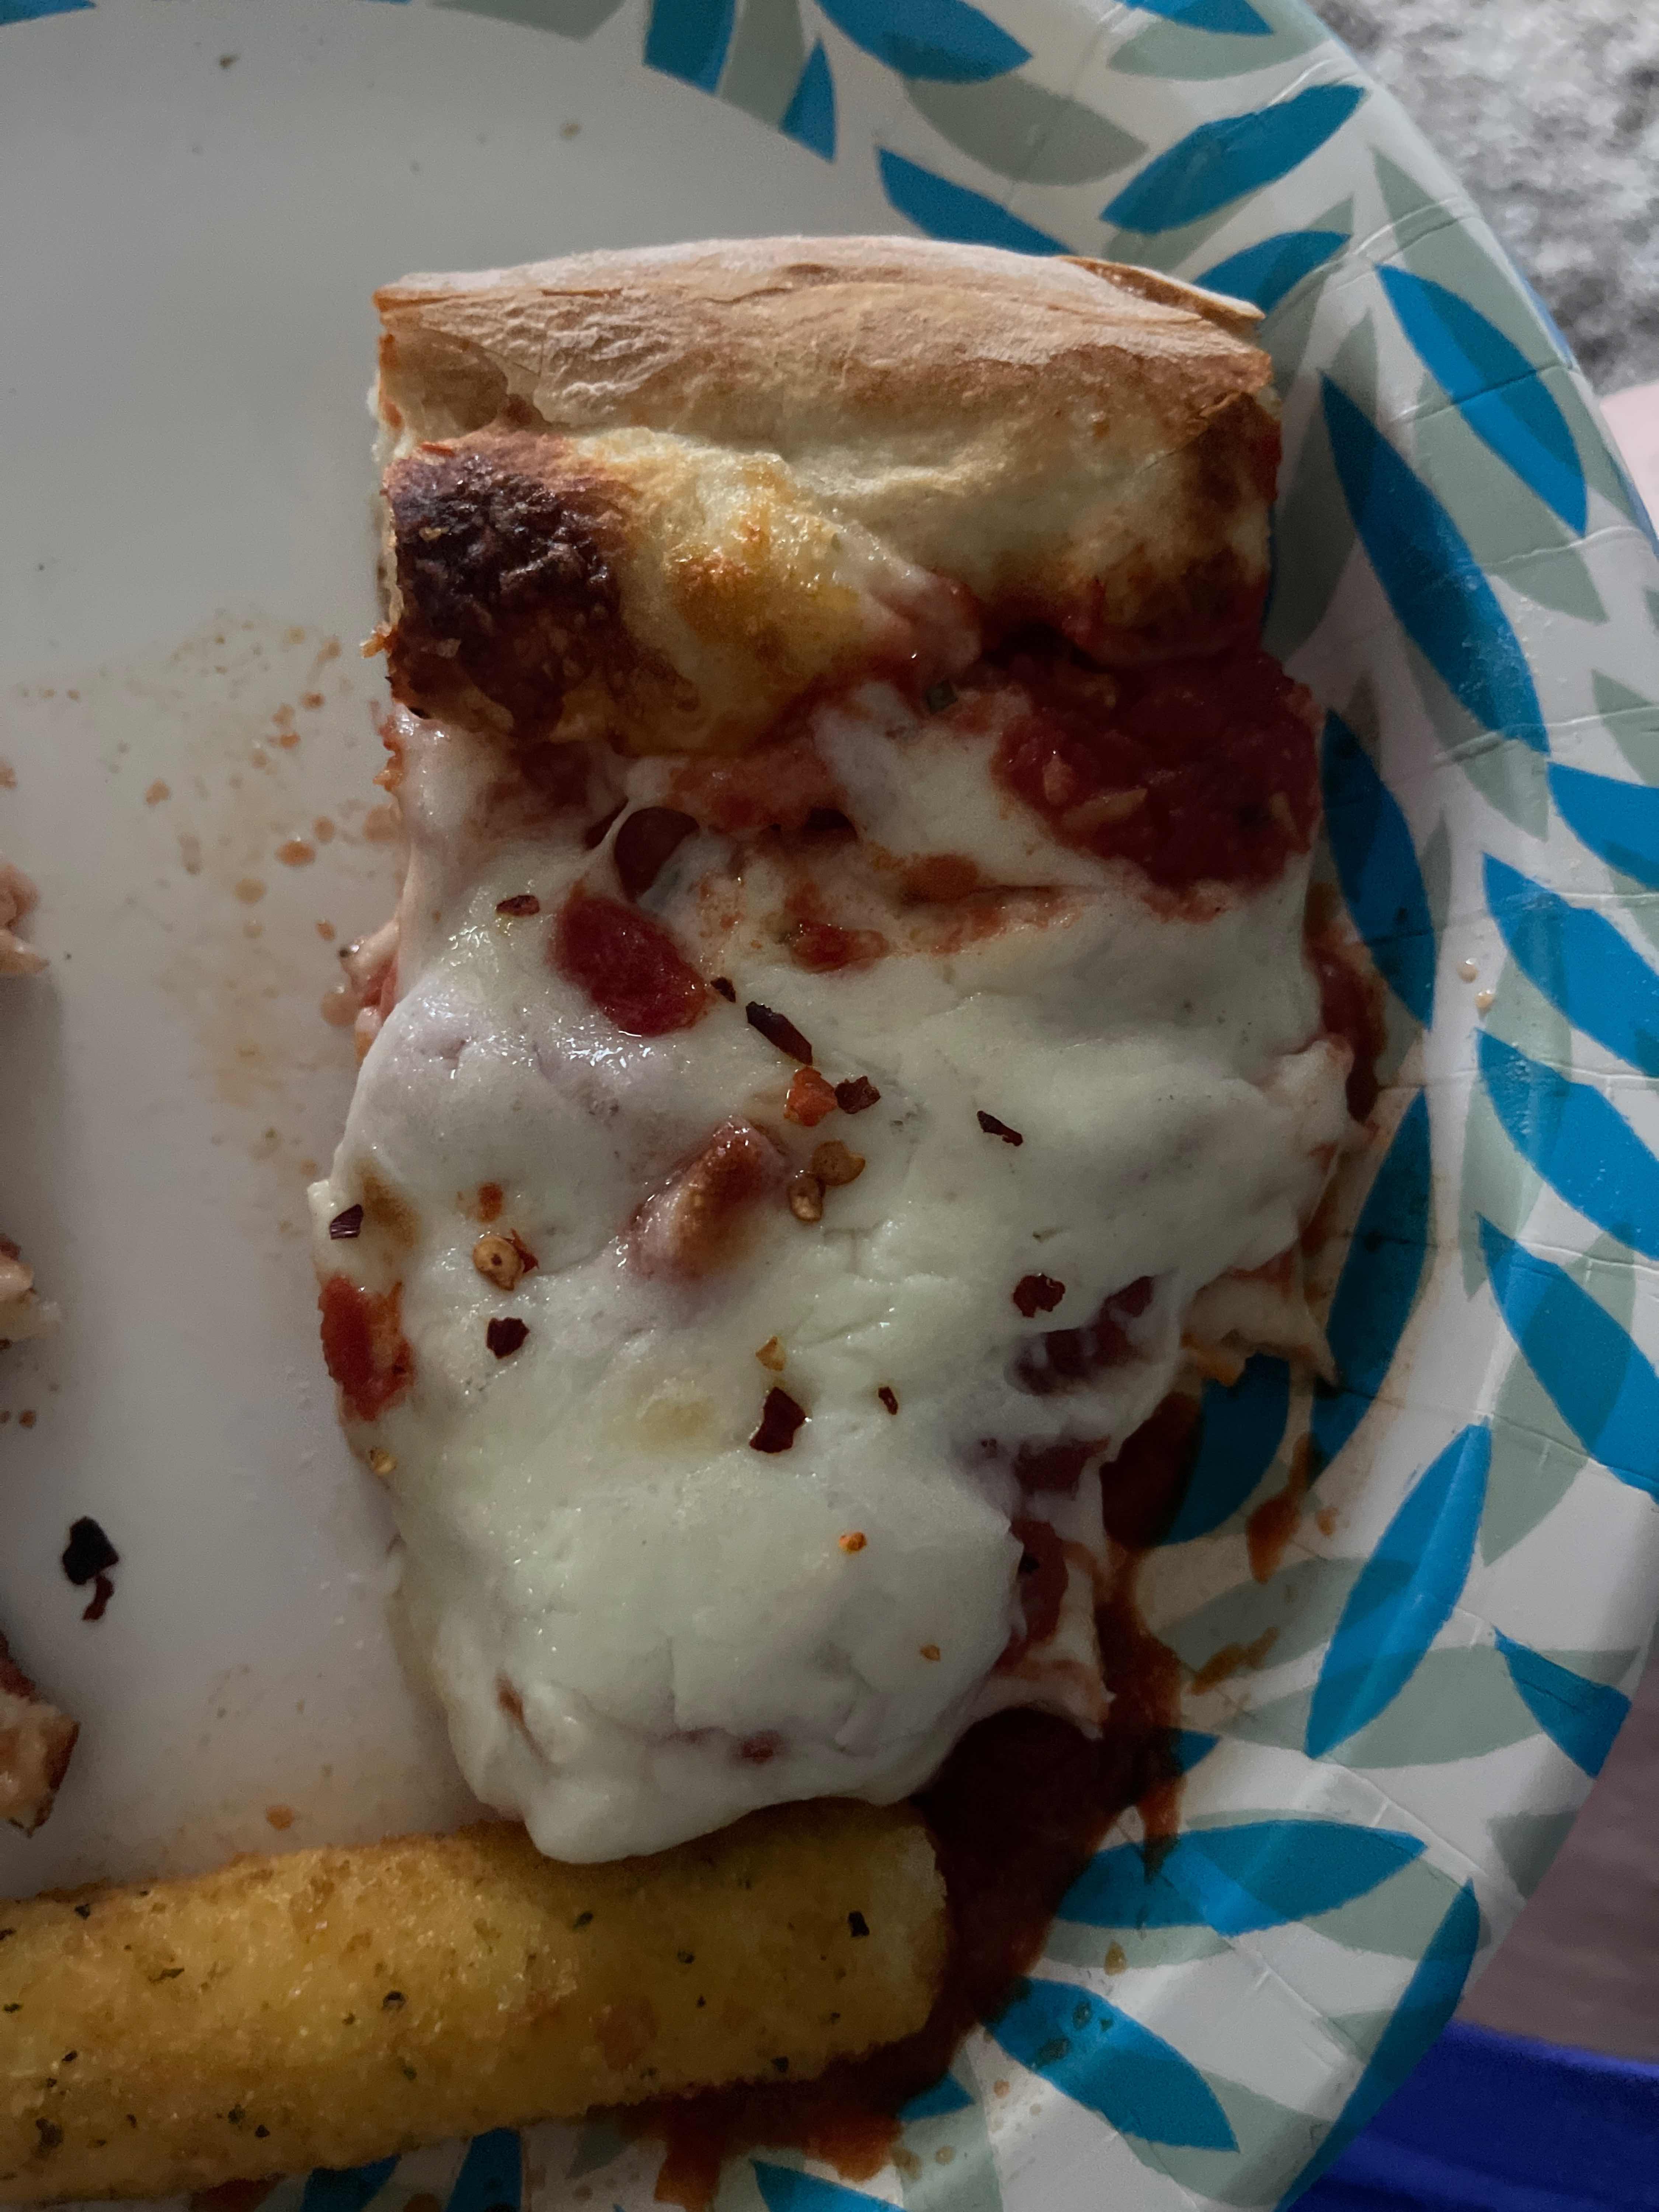 Bigfoot Pizza - Ashland, MA Restaurant, Menu + Delivery